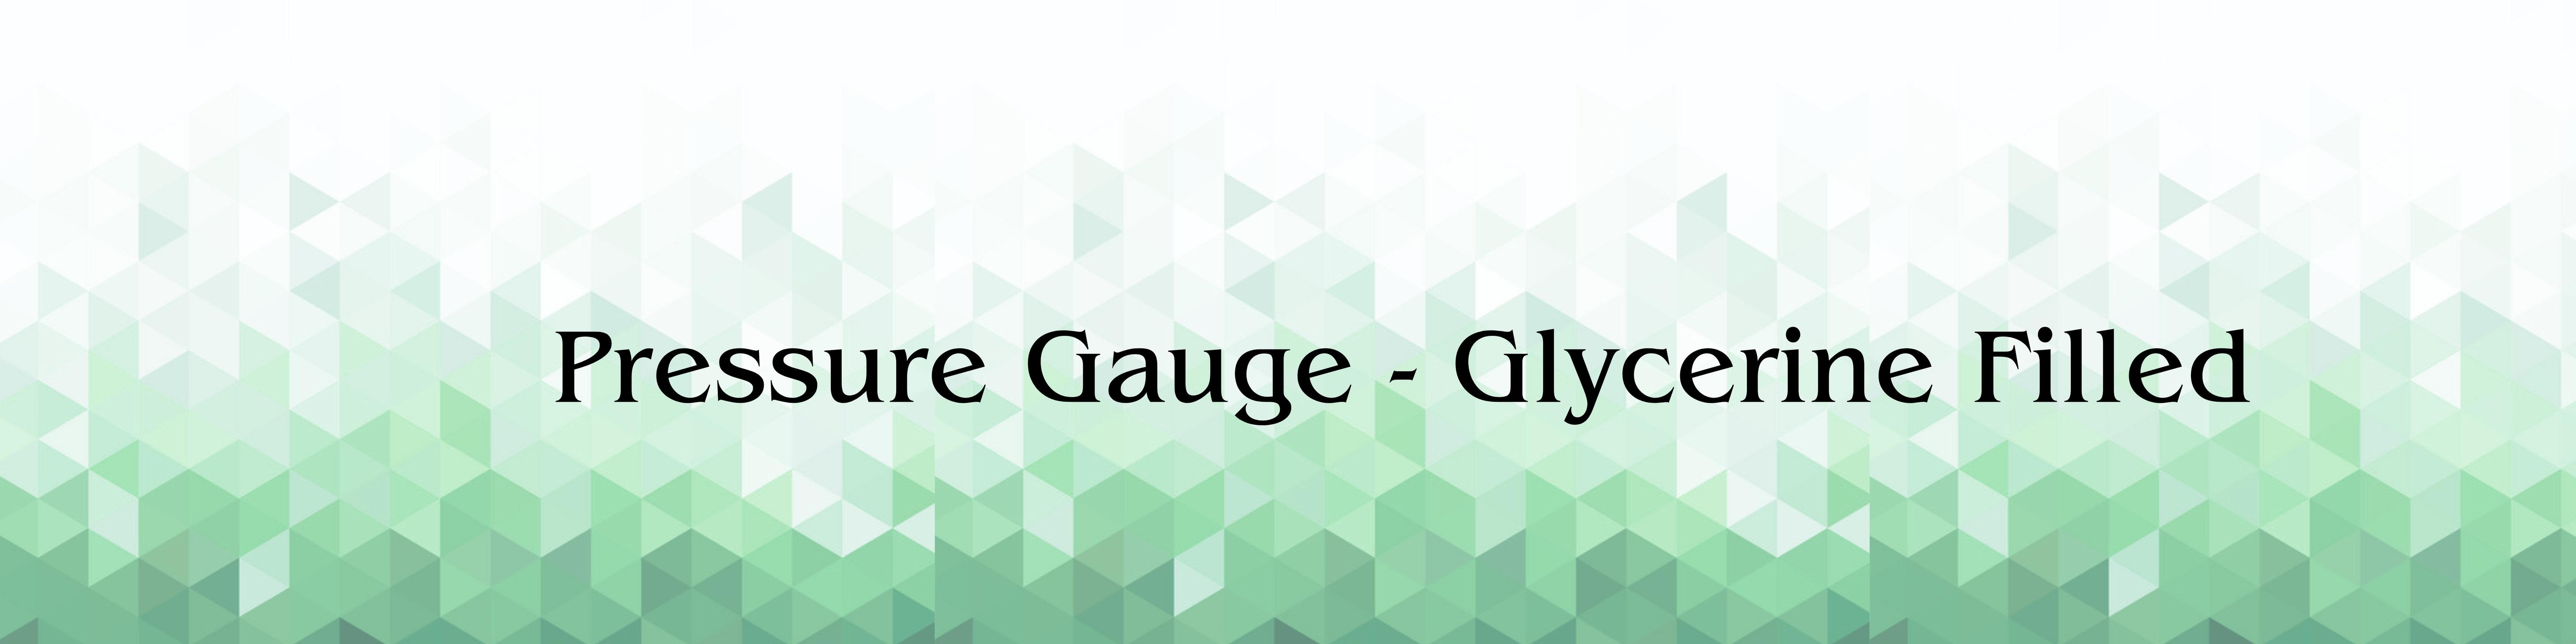 PRESSURE-GAUGE-GLYCERINE-FILLED